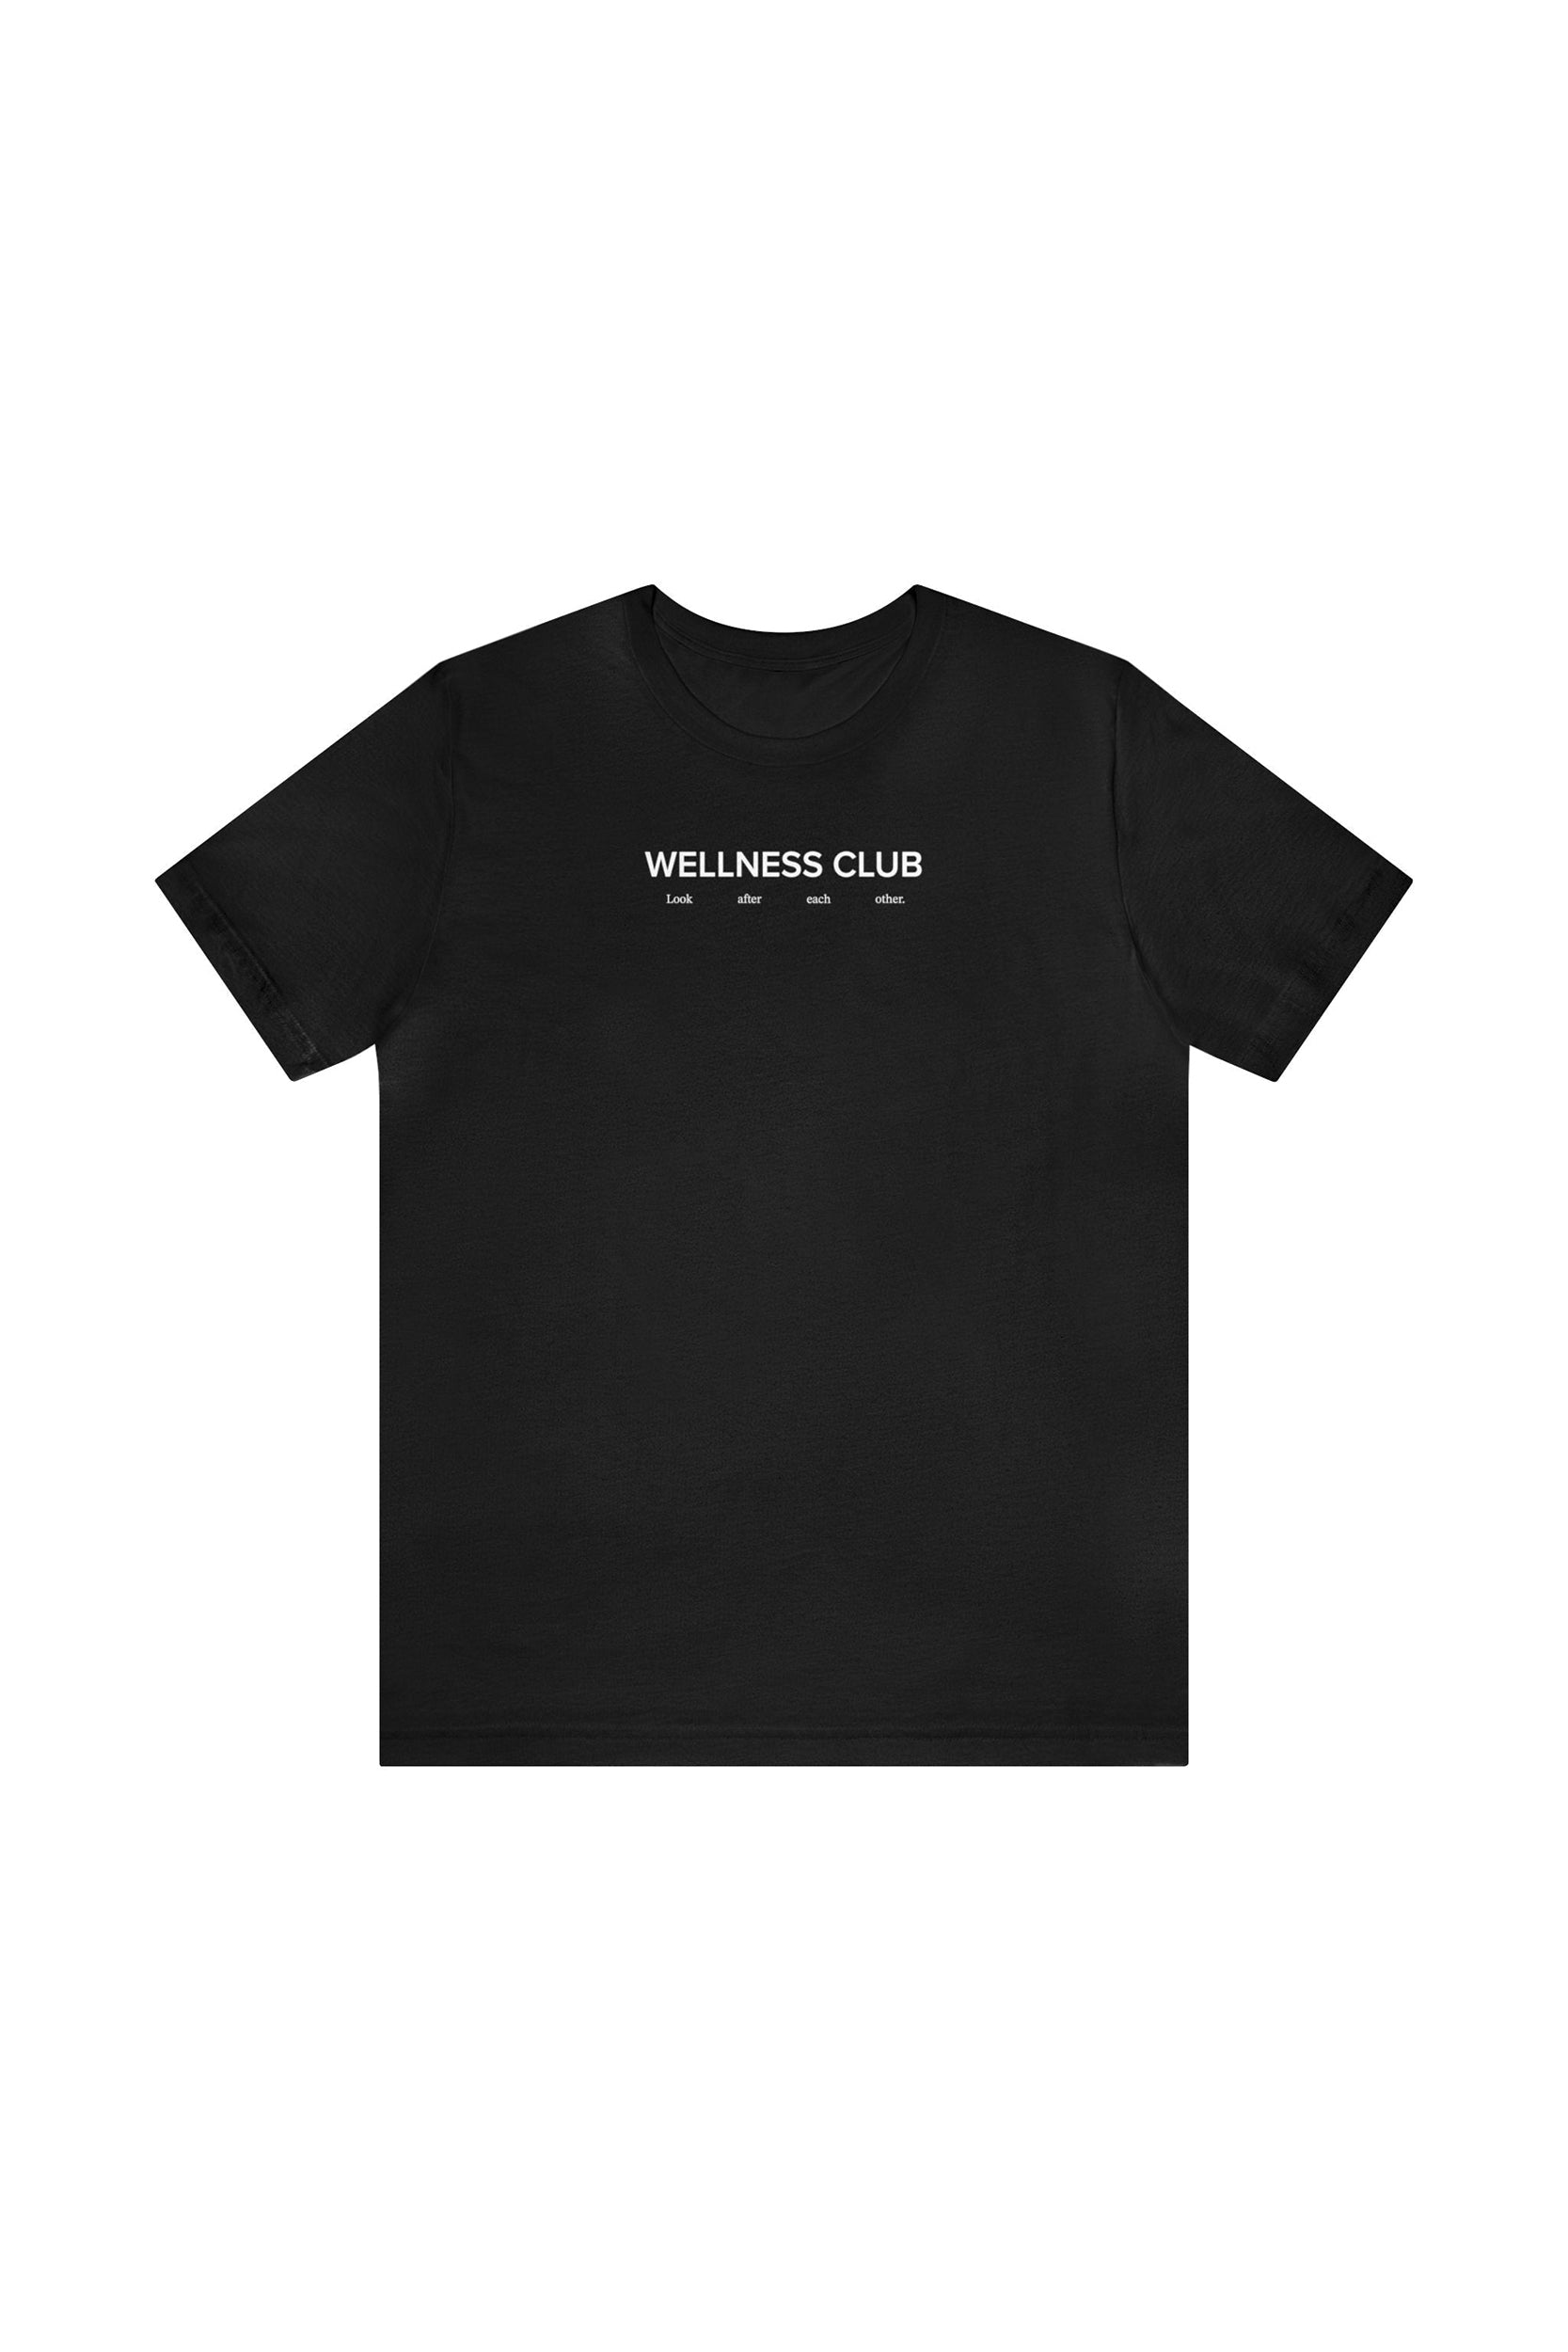 Image of "Wellness Club"  T-Shirt